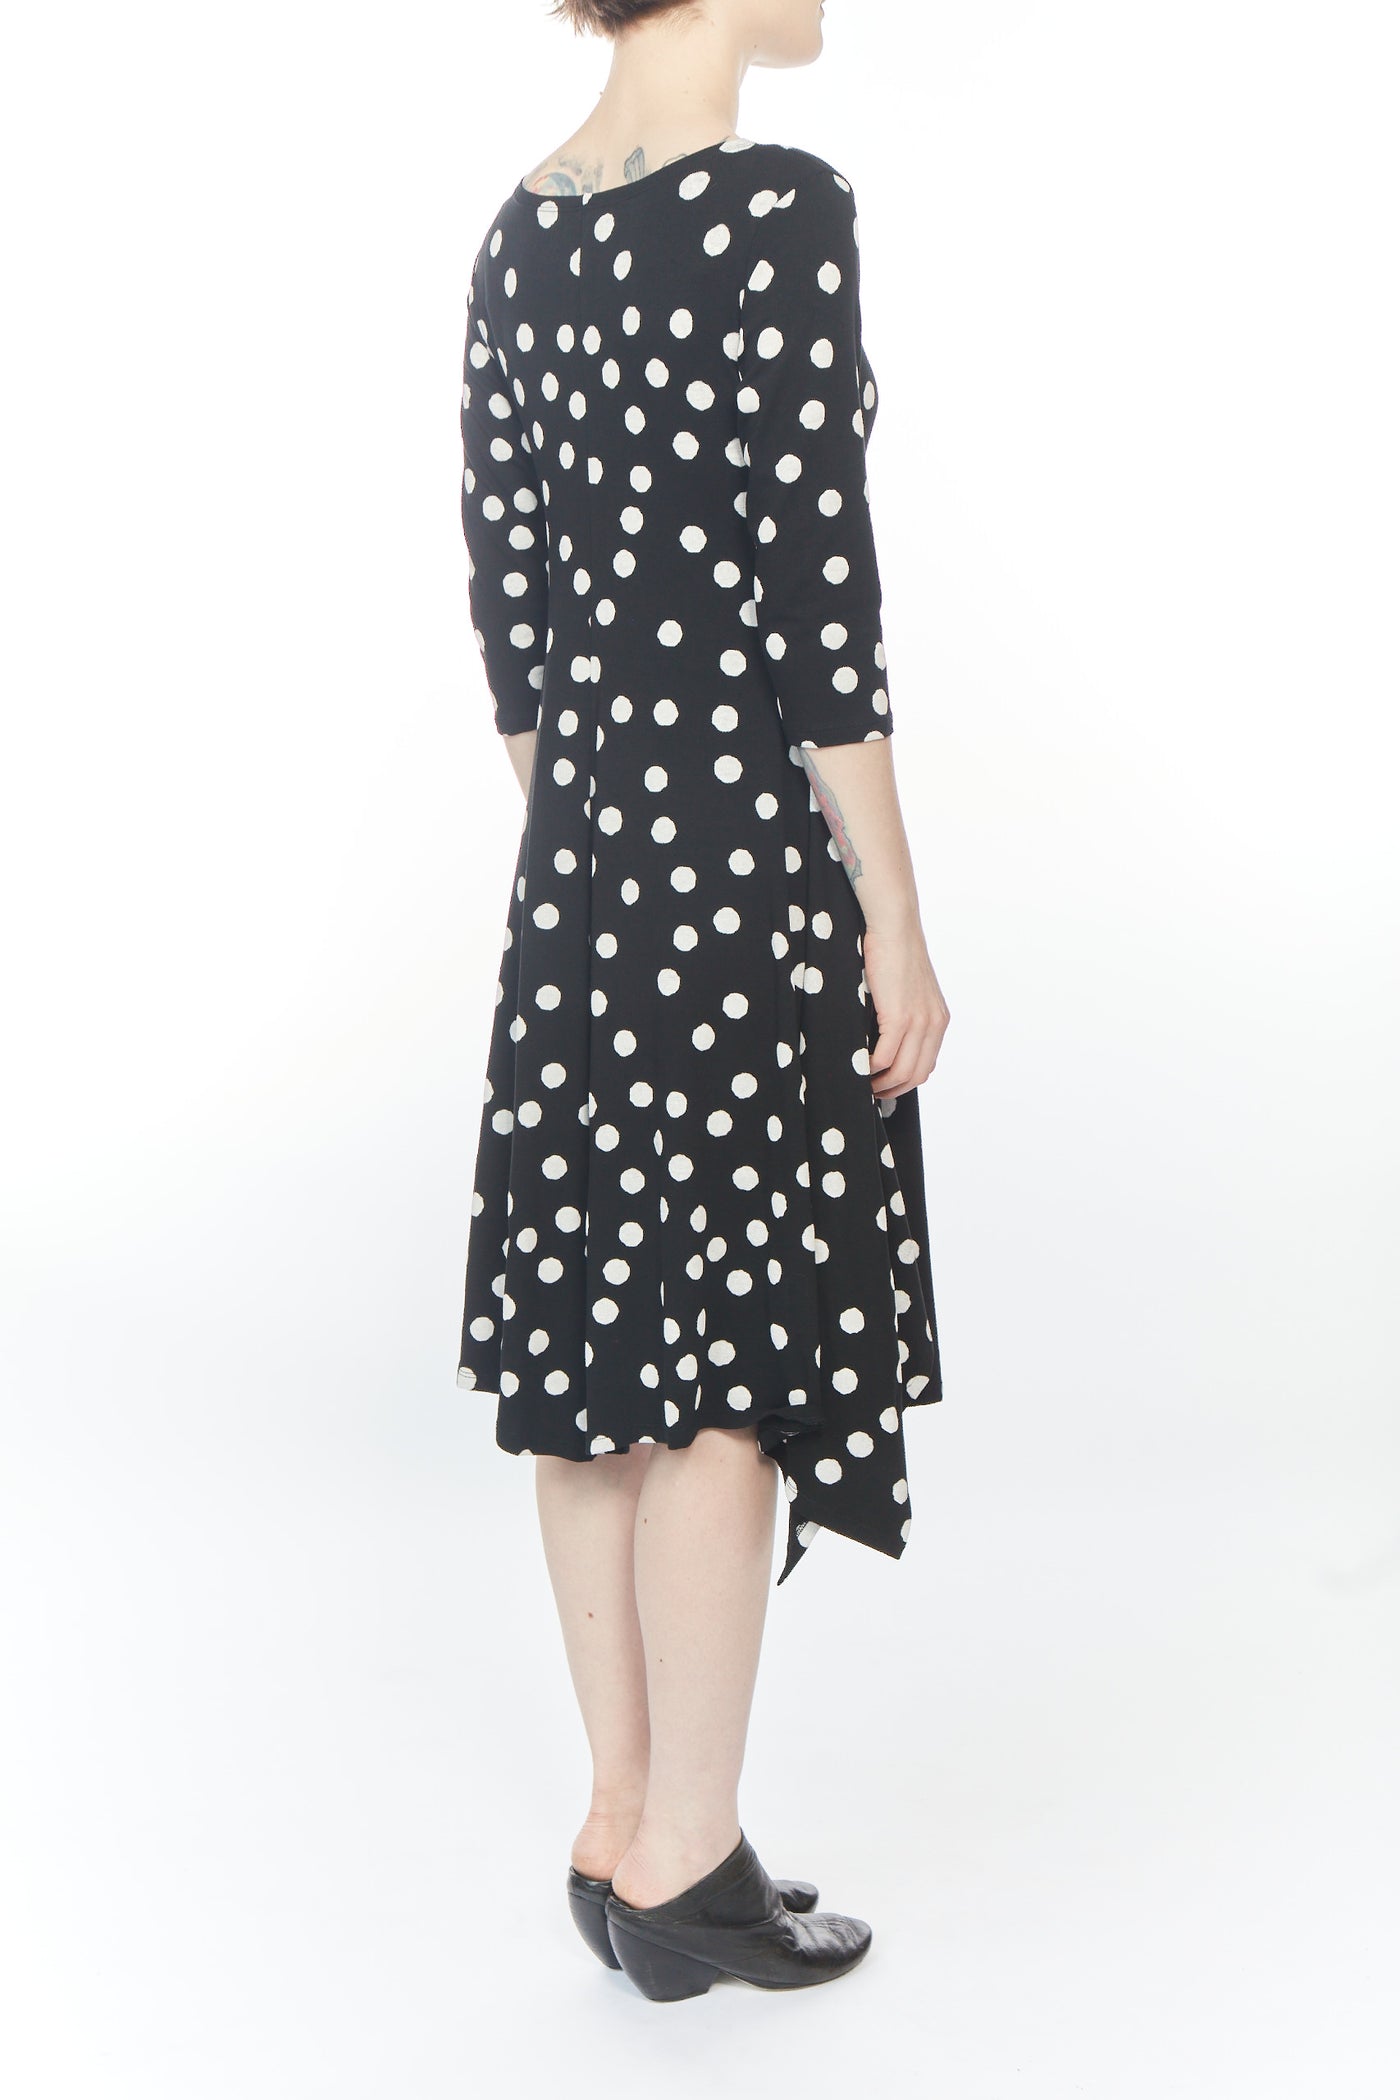 Cecilia 3/4 Sleeve Dress Black White Dot